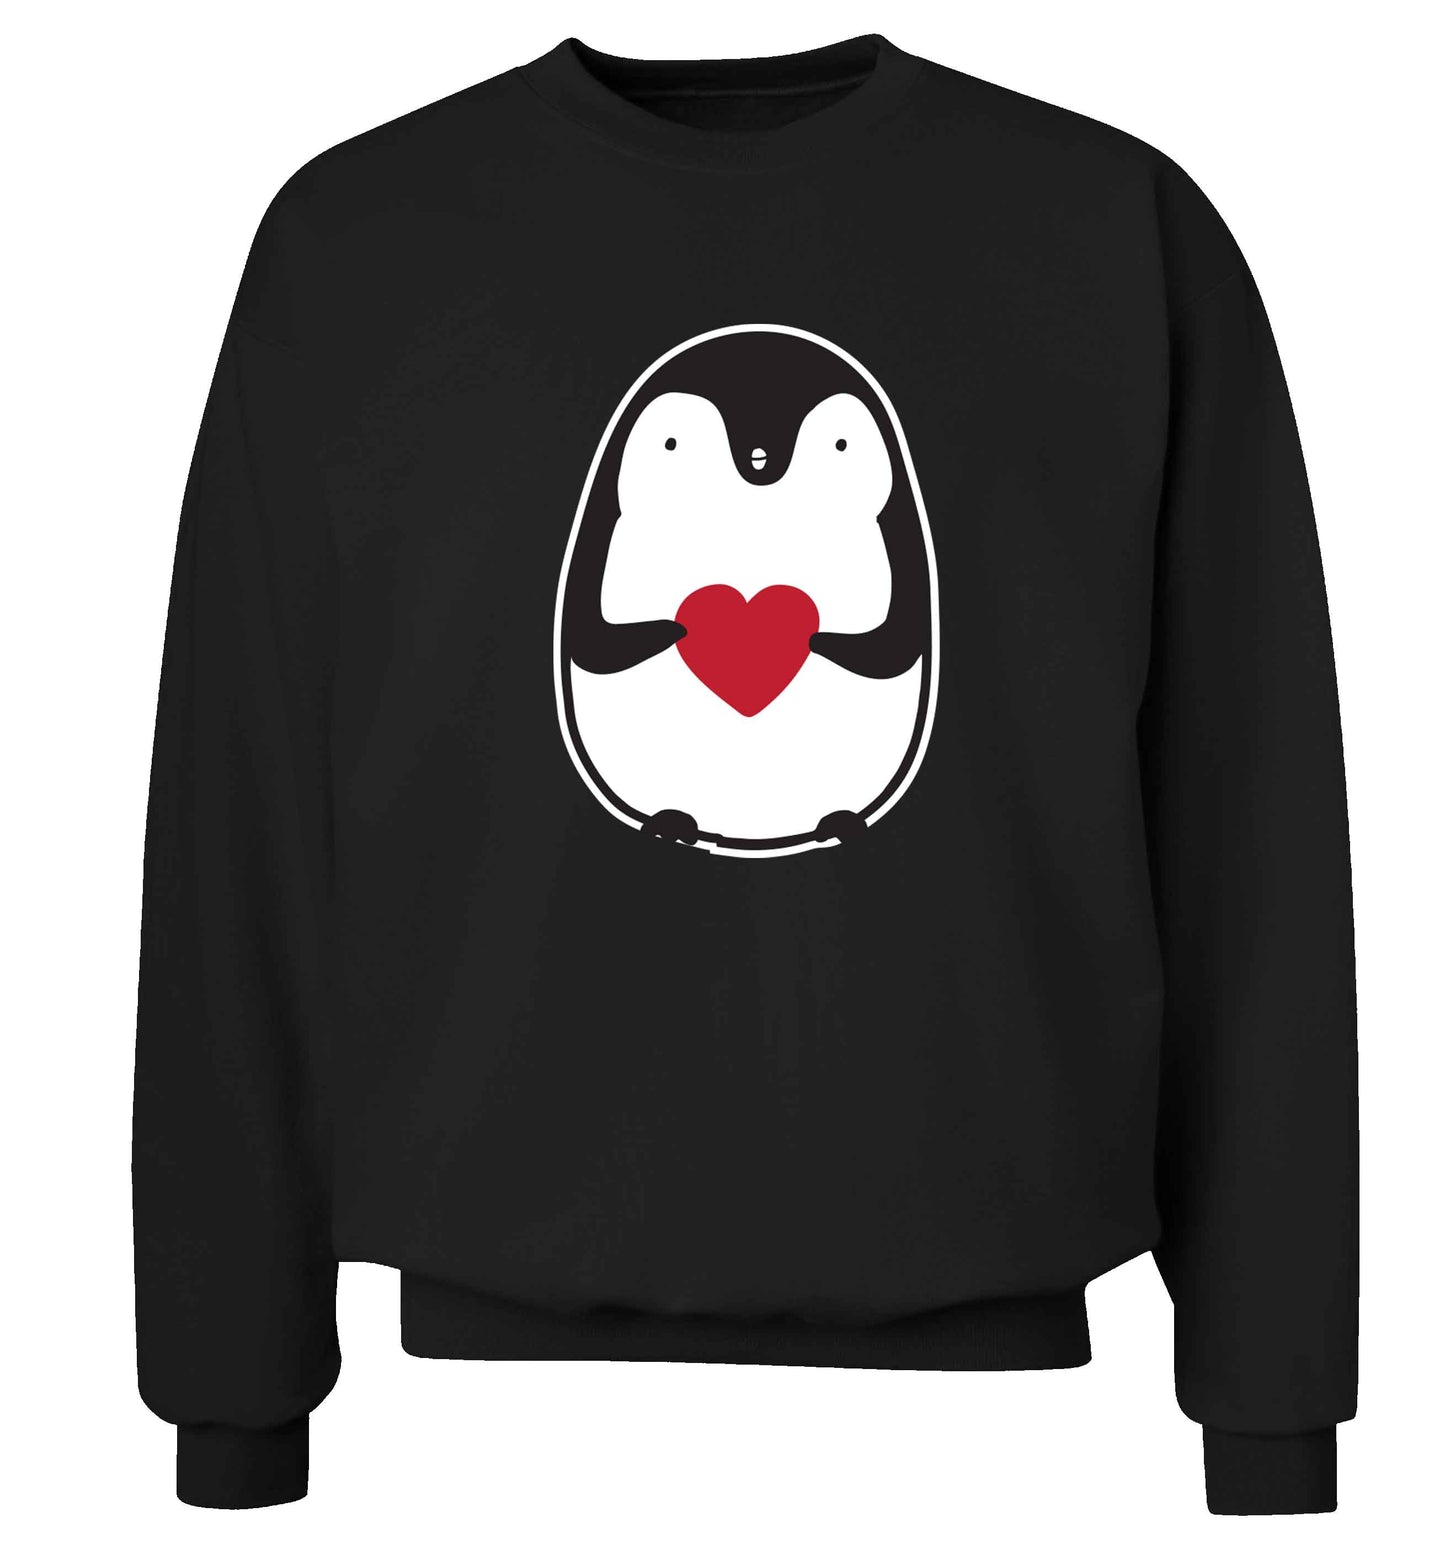 Cute penguin heart adult's unisex black sweater 2XL